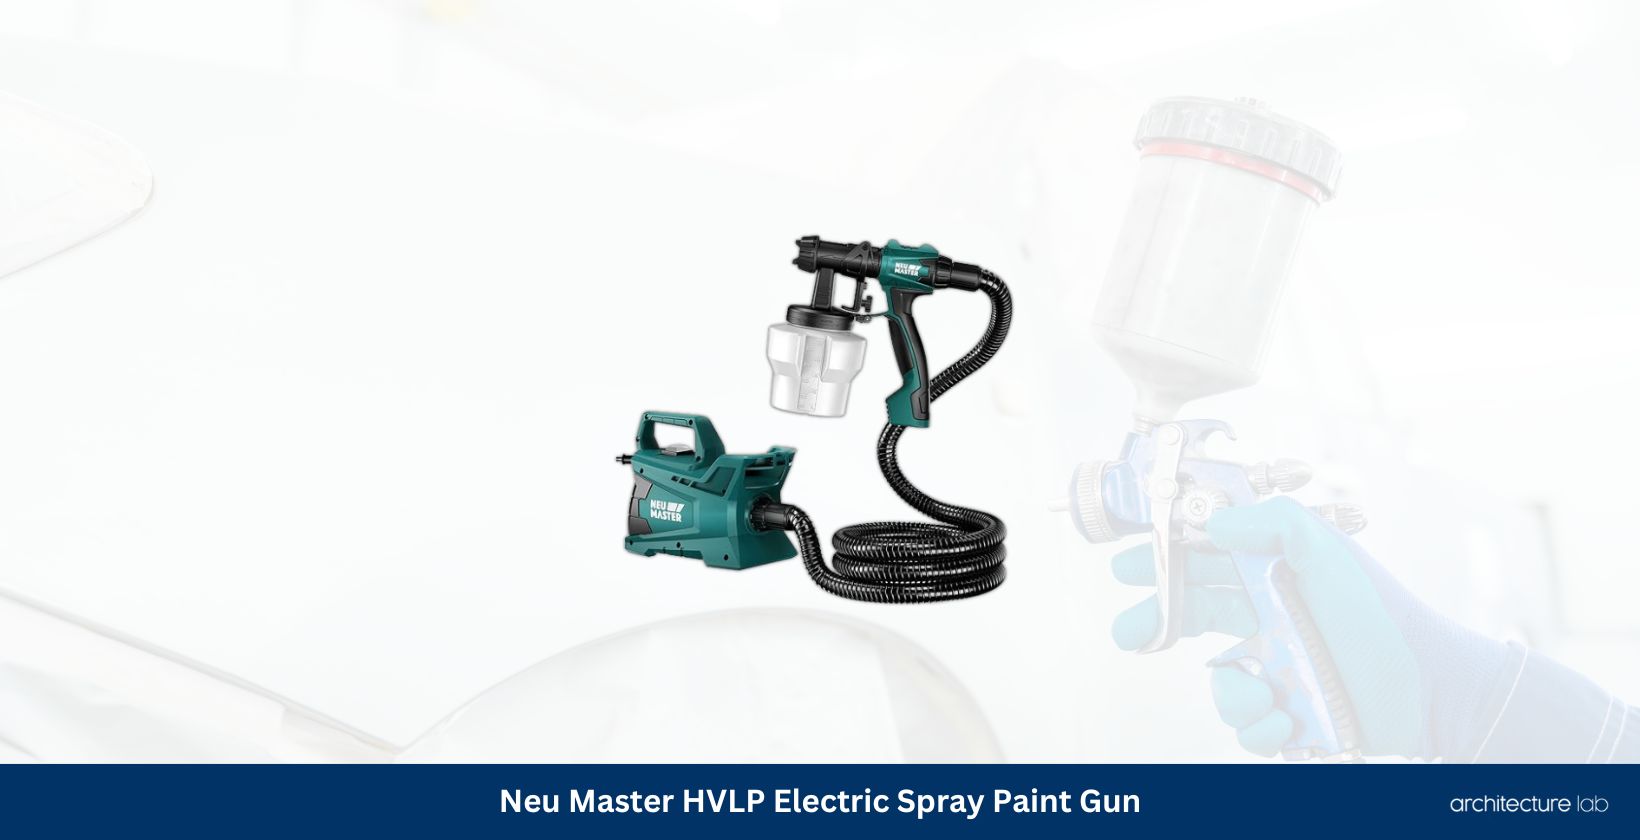 Neu master 600w hvlp electric spray paint gun n3140